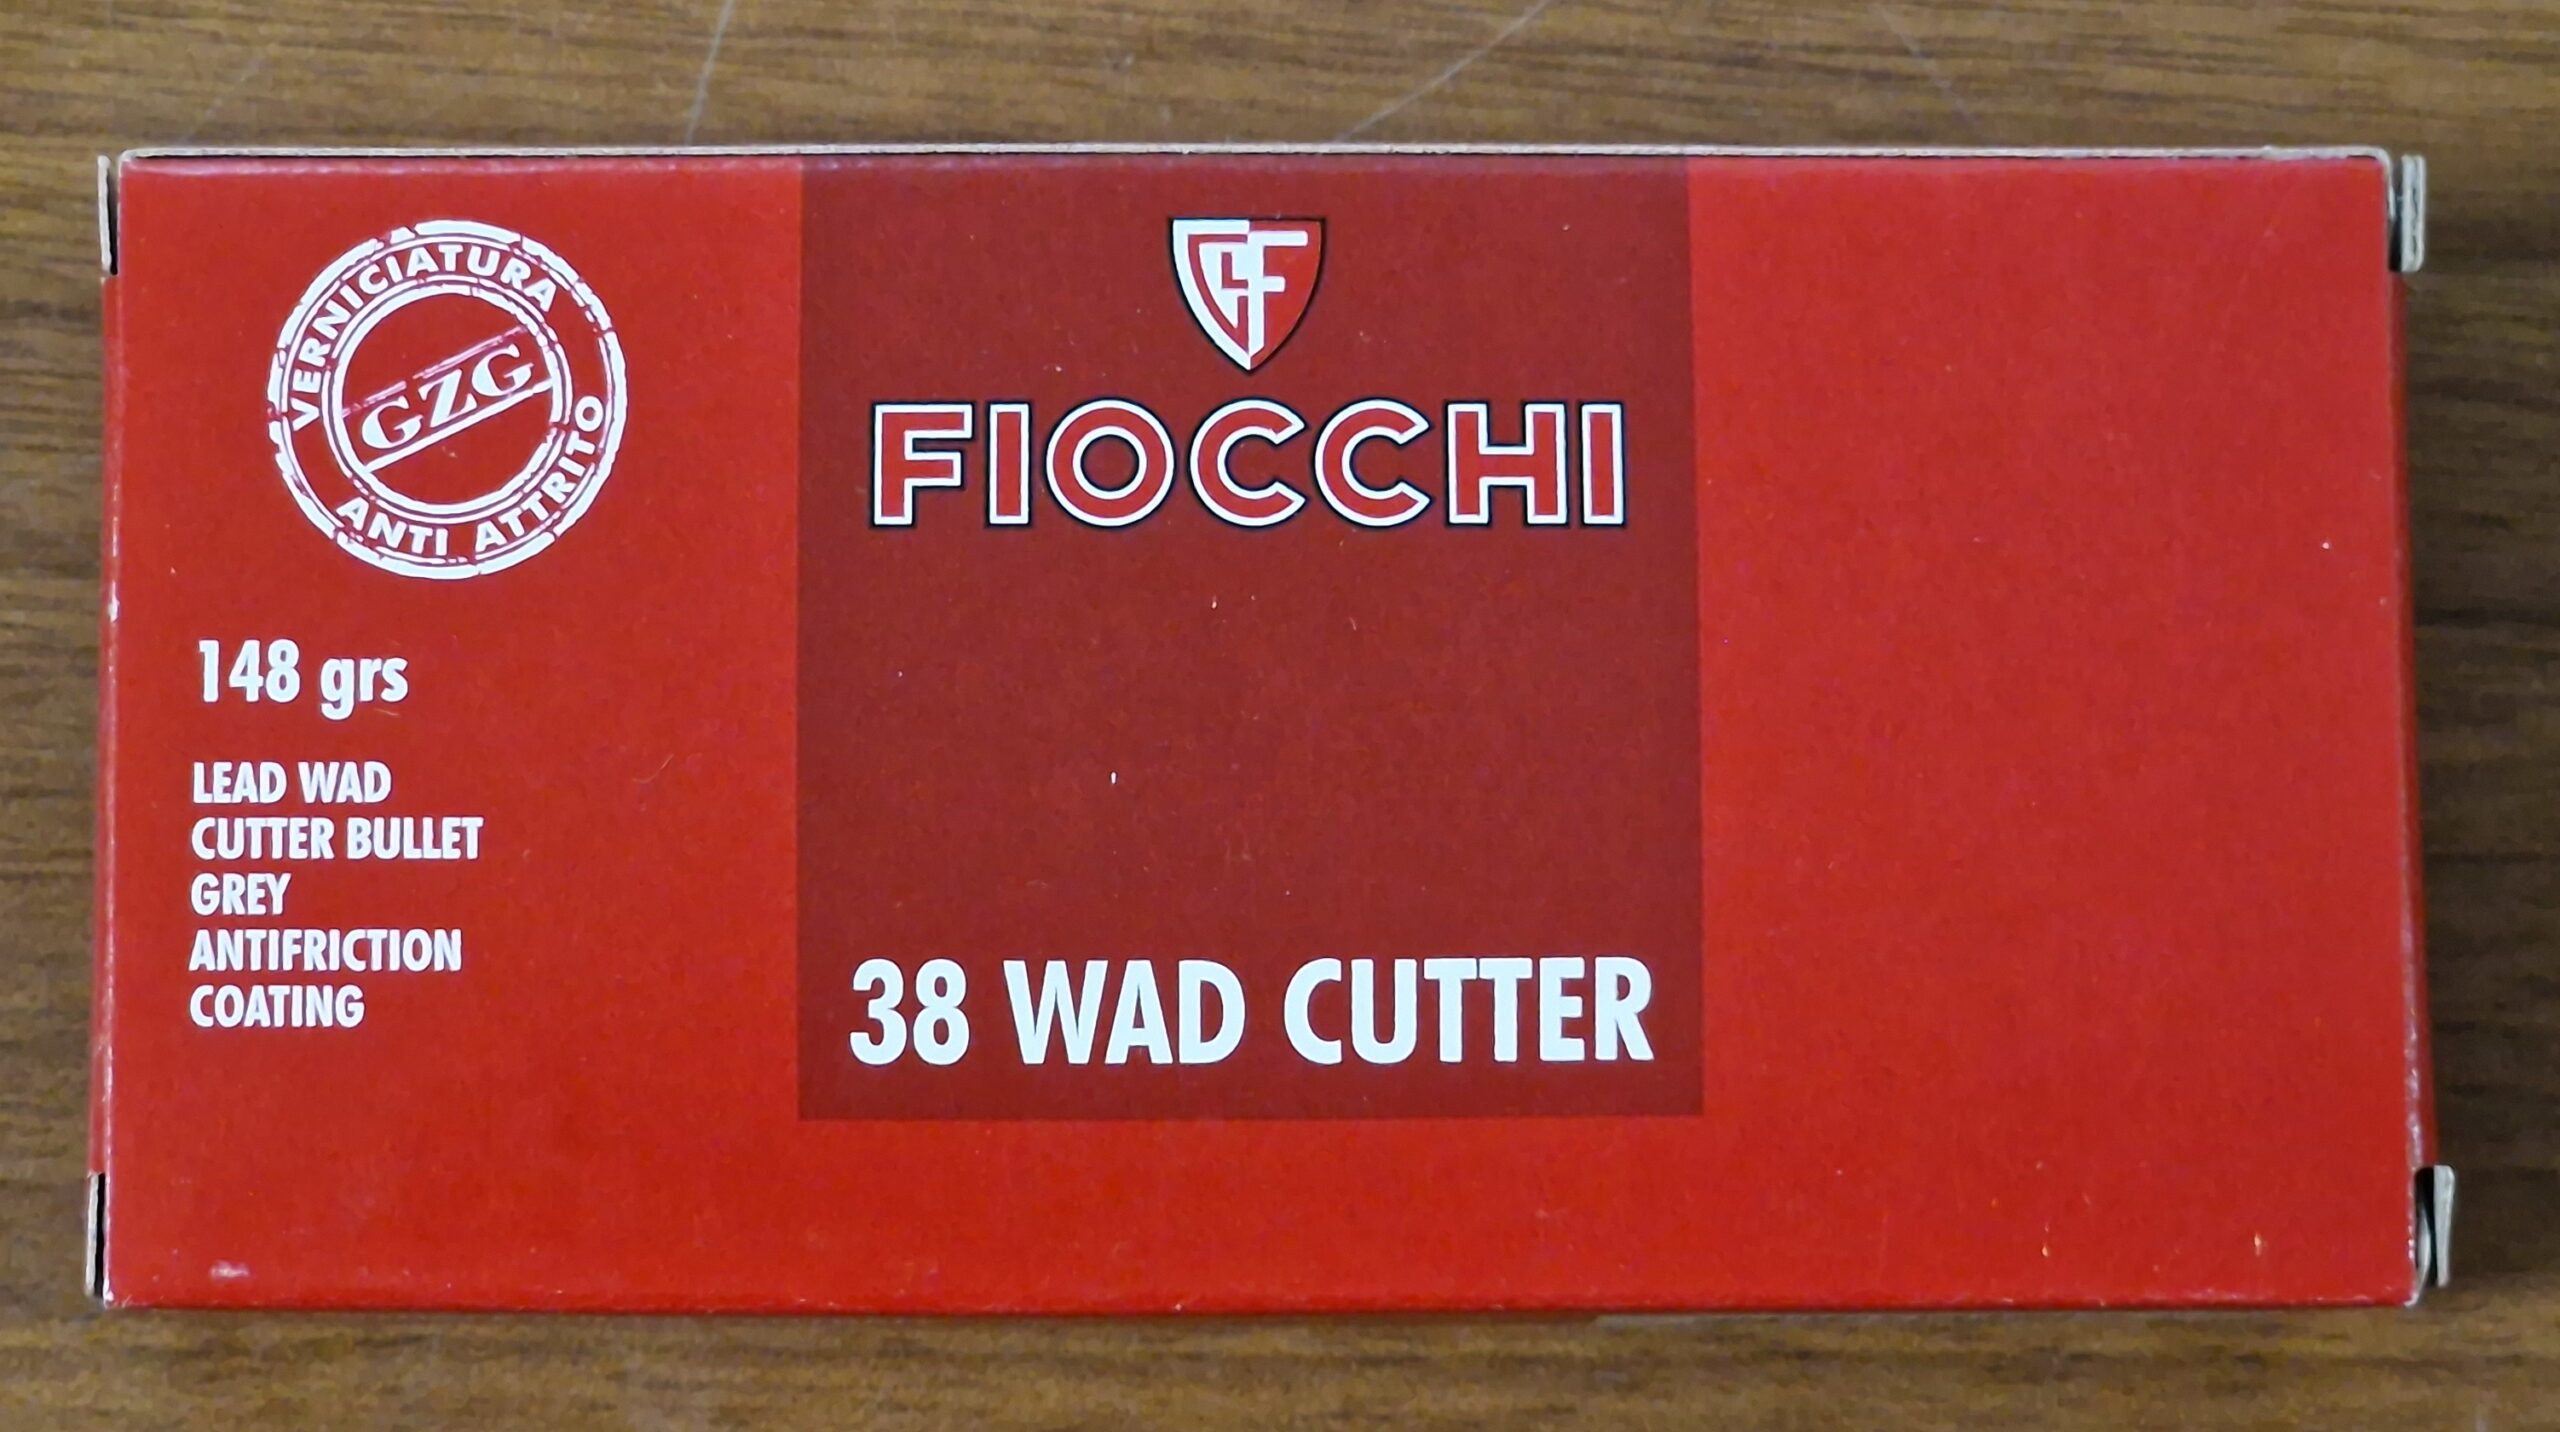 Fiocchi 38 wad cutter main image